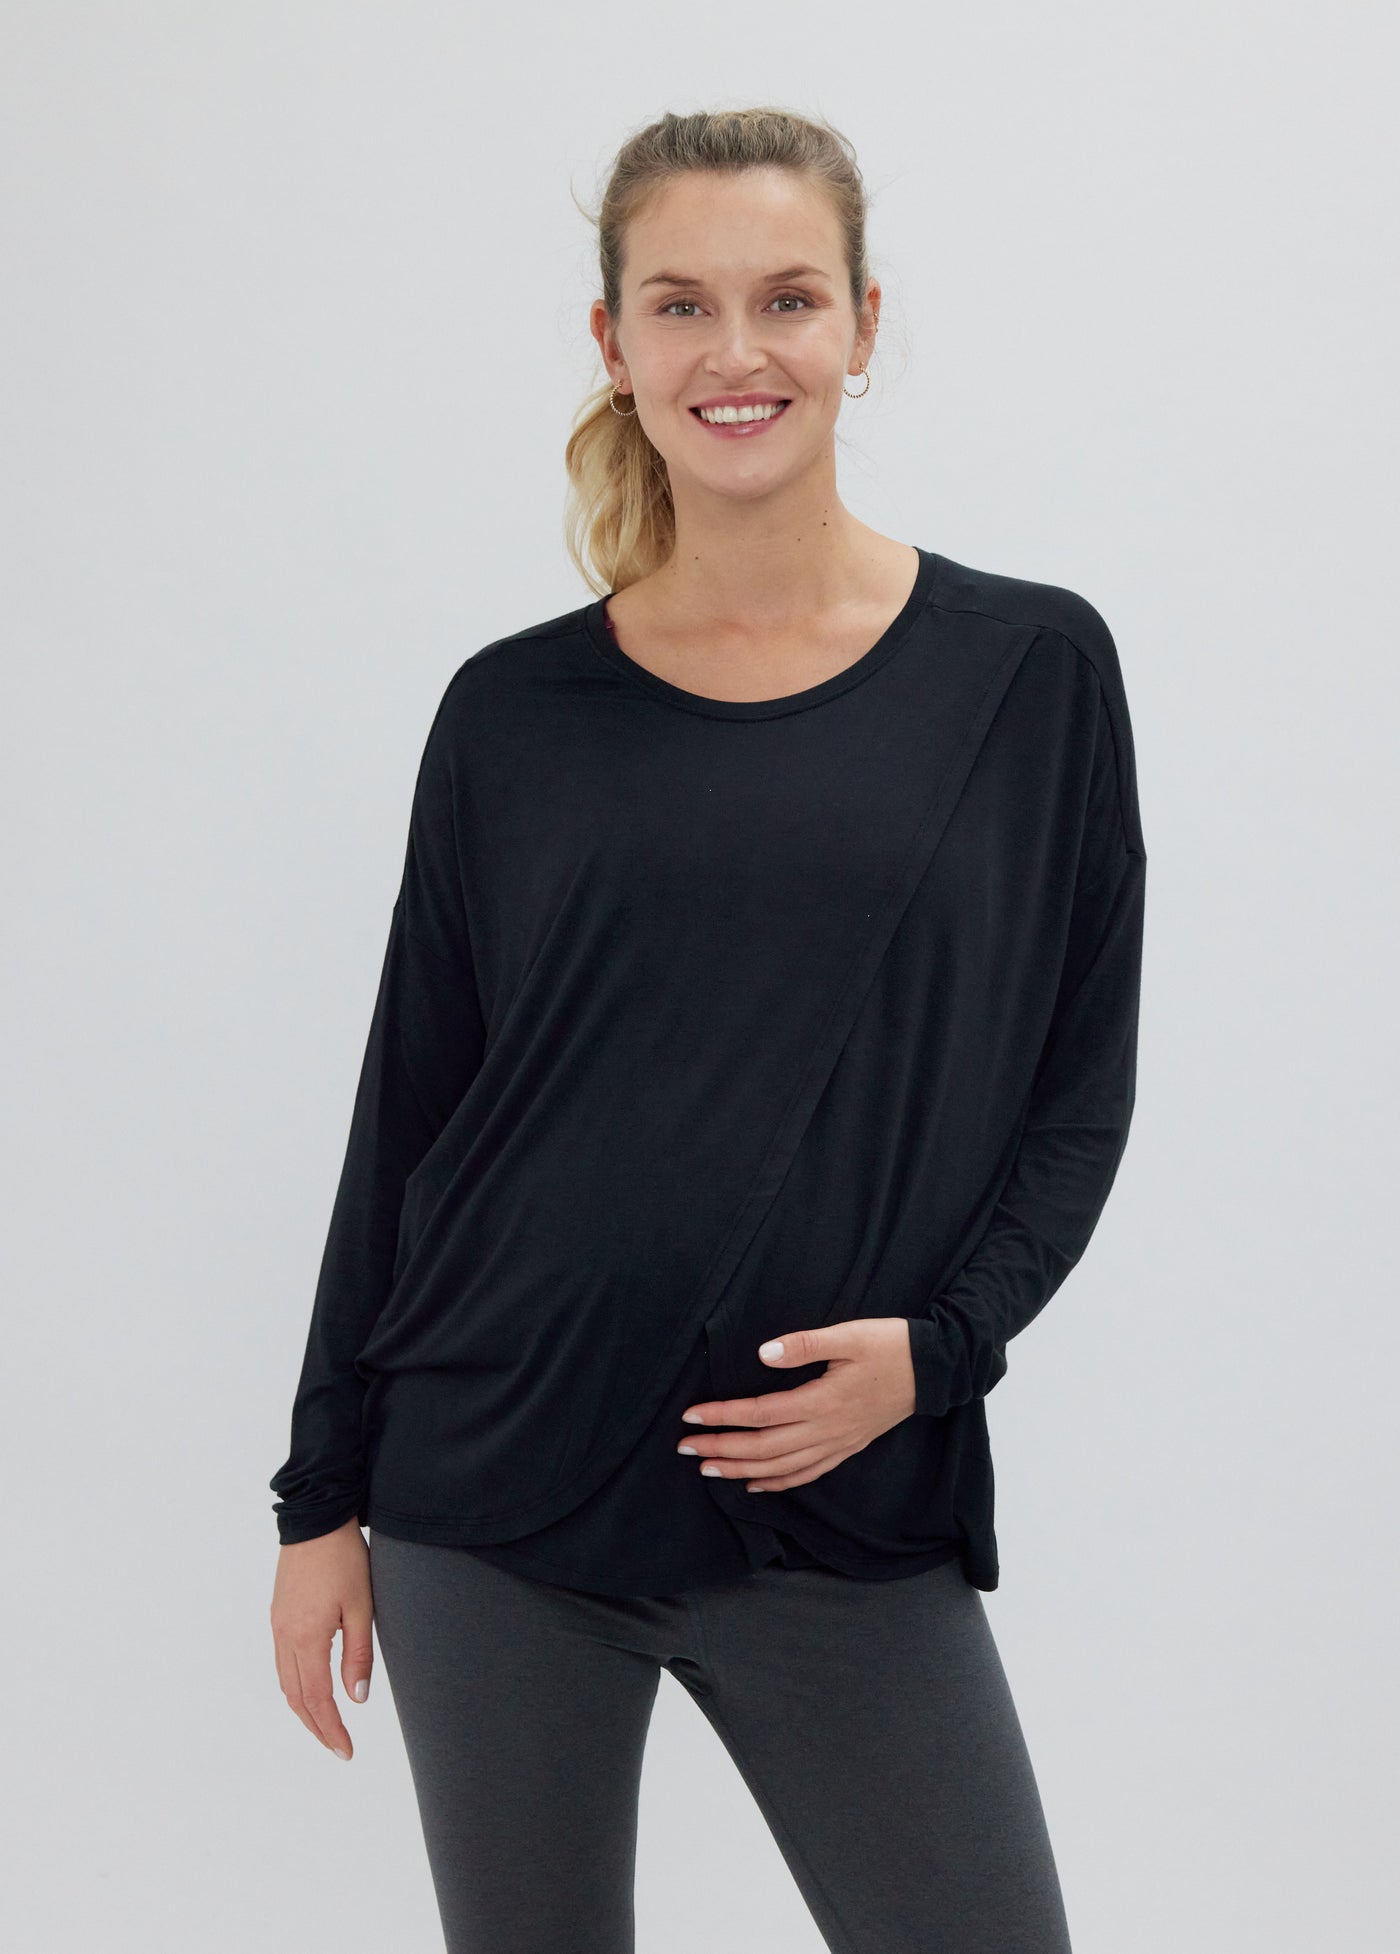 Svieta is 5’10”, 31 weeks pregnant, and wearing size medium||Black